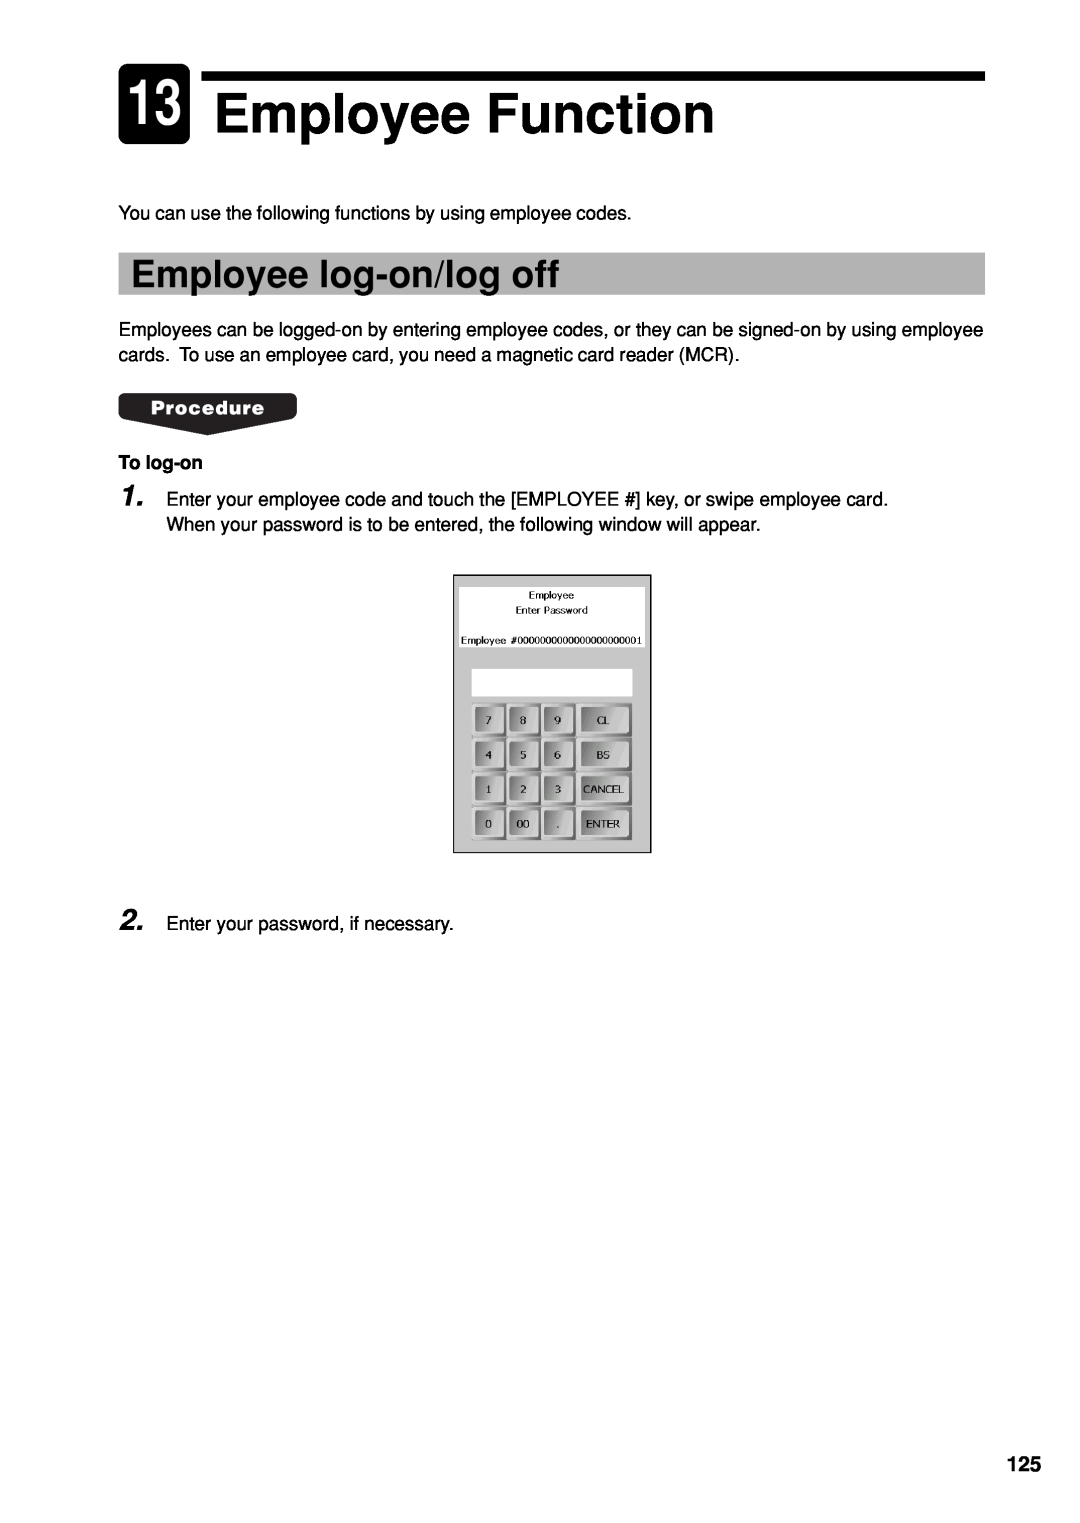 Sharp UP-X300 instruction manual 13Employee Function, Employee log-on/logoff, To log-on 